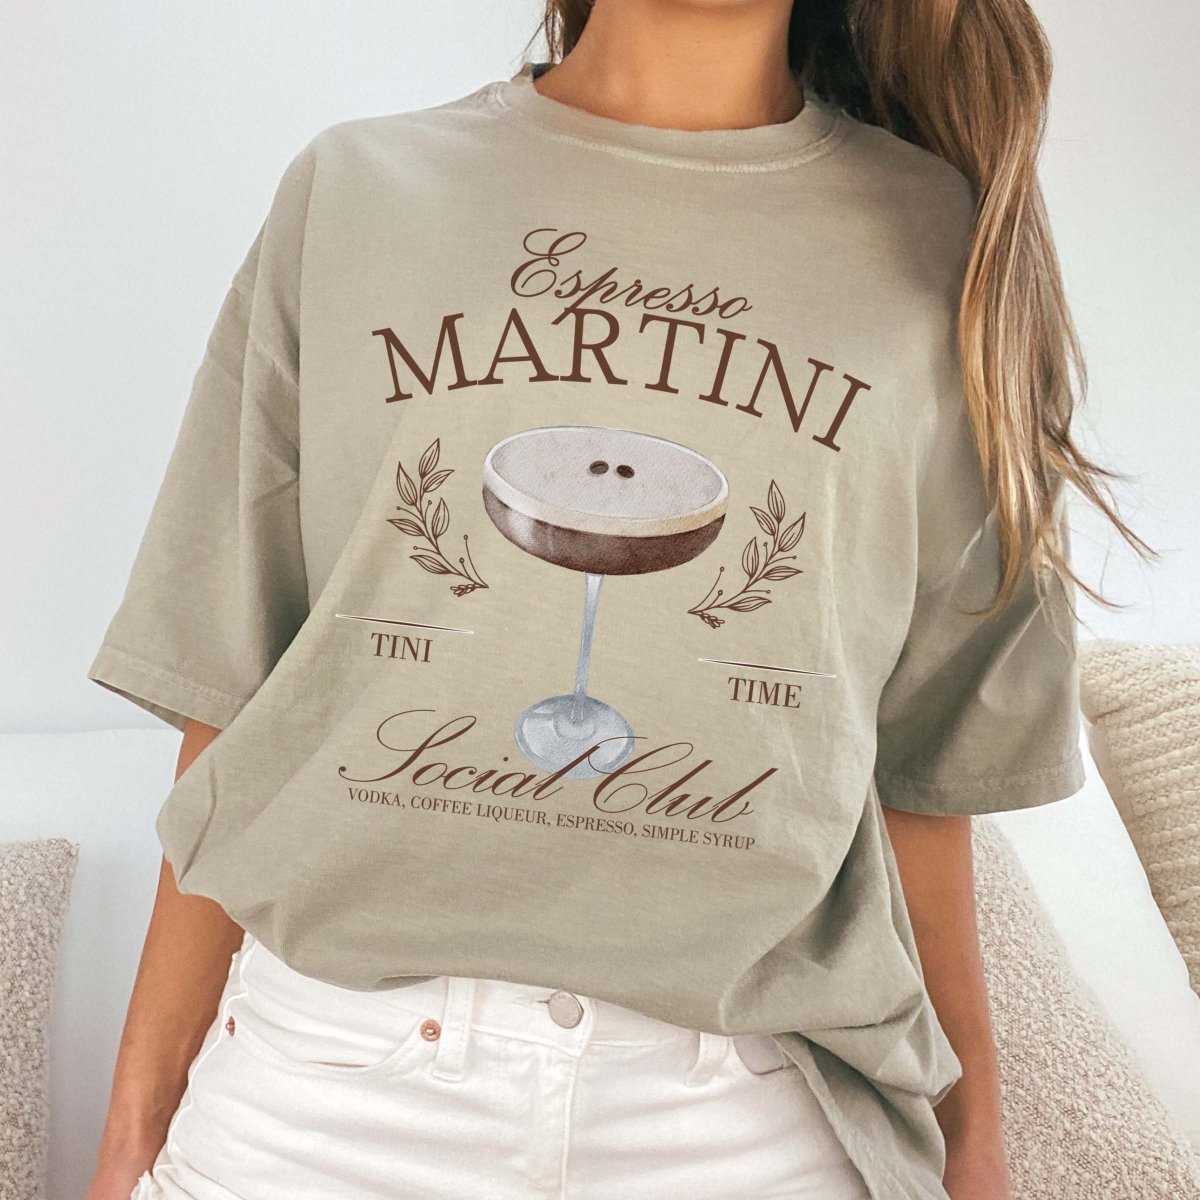 Espresso Martini Social Club Wholesale Tee - Limeberry Designs